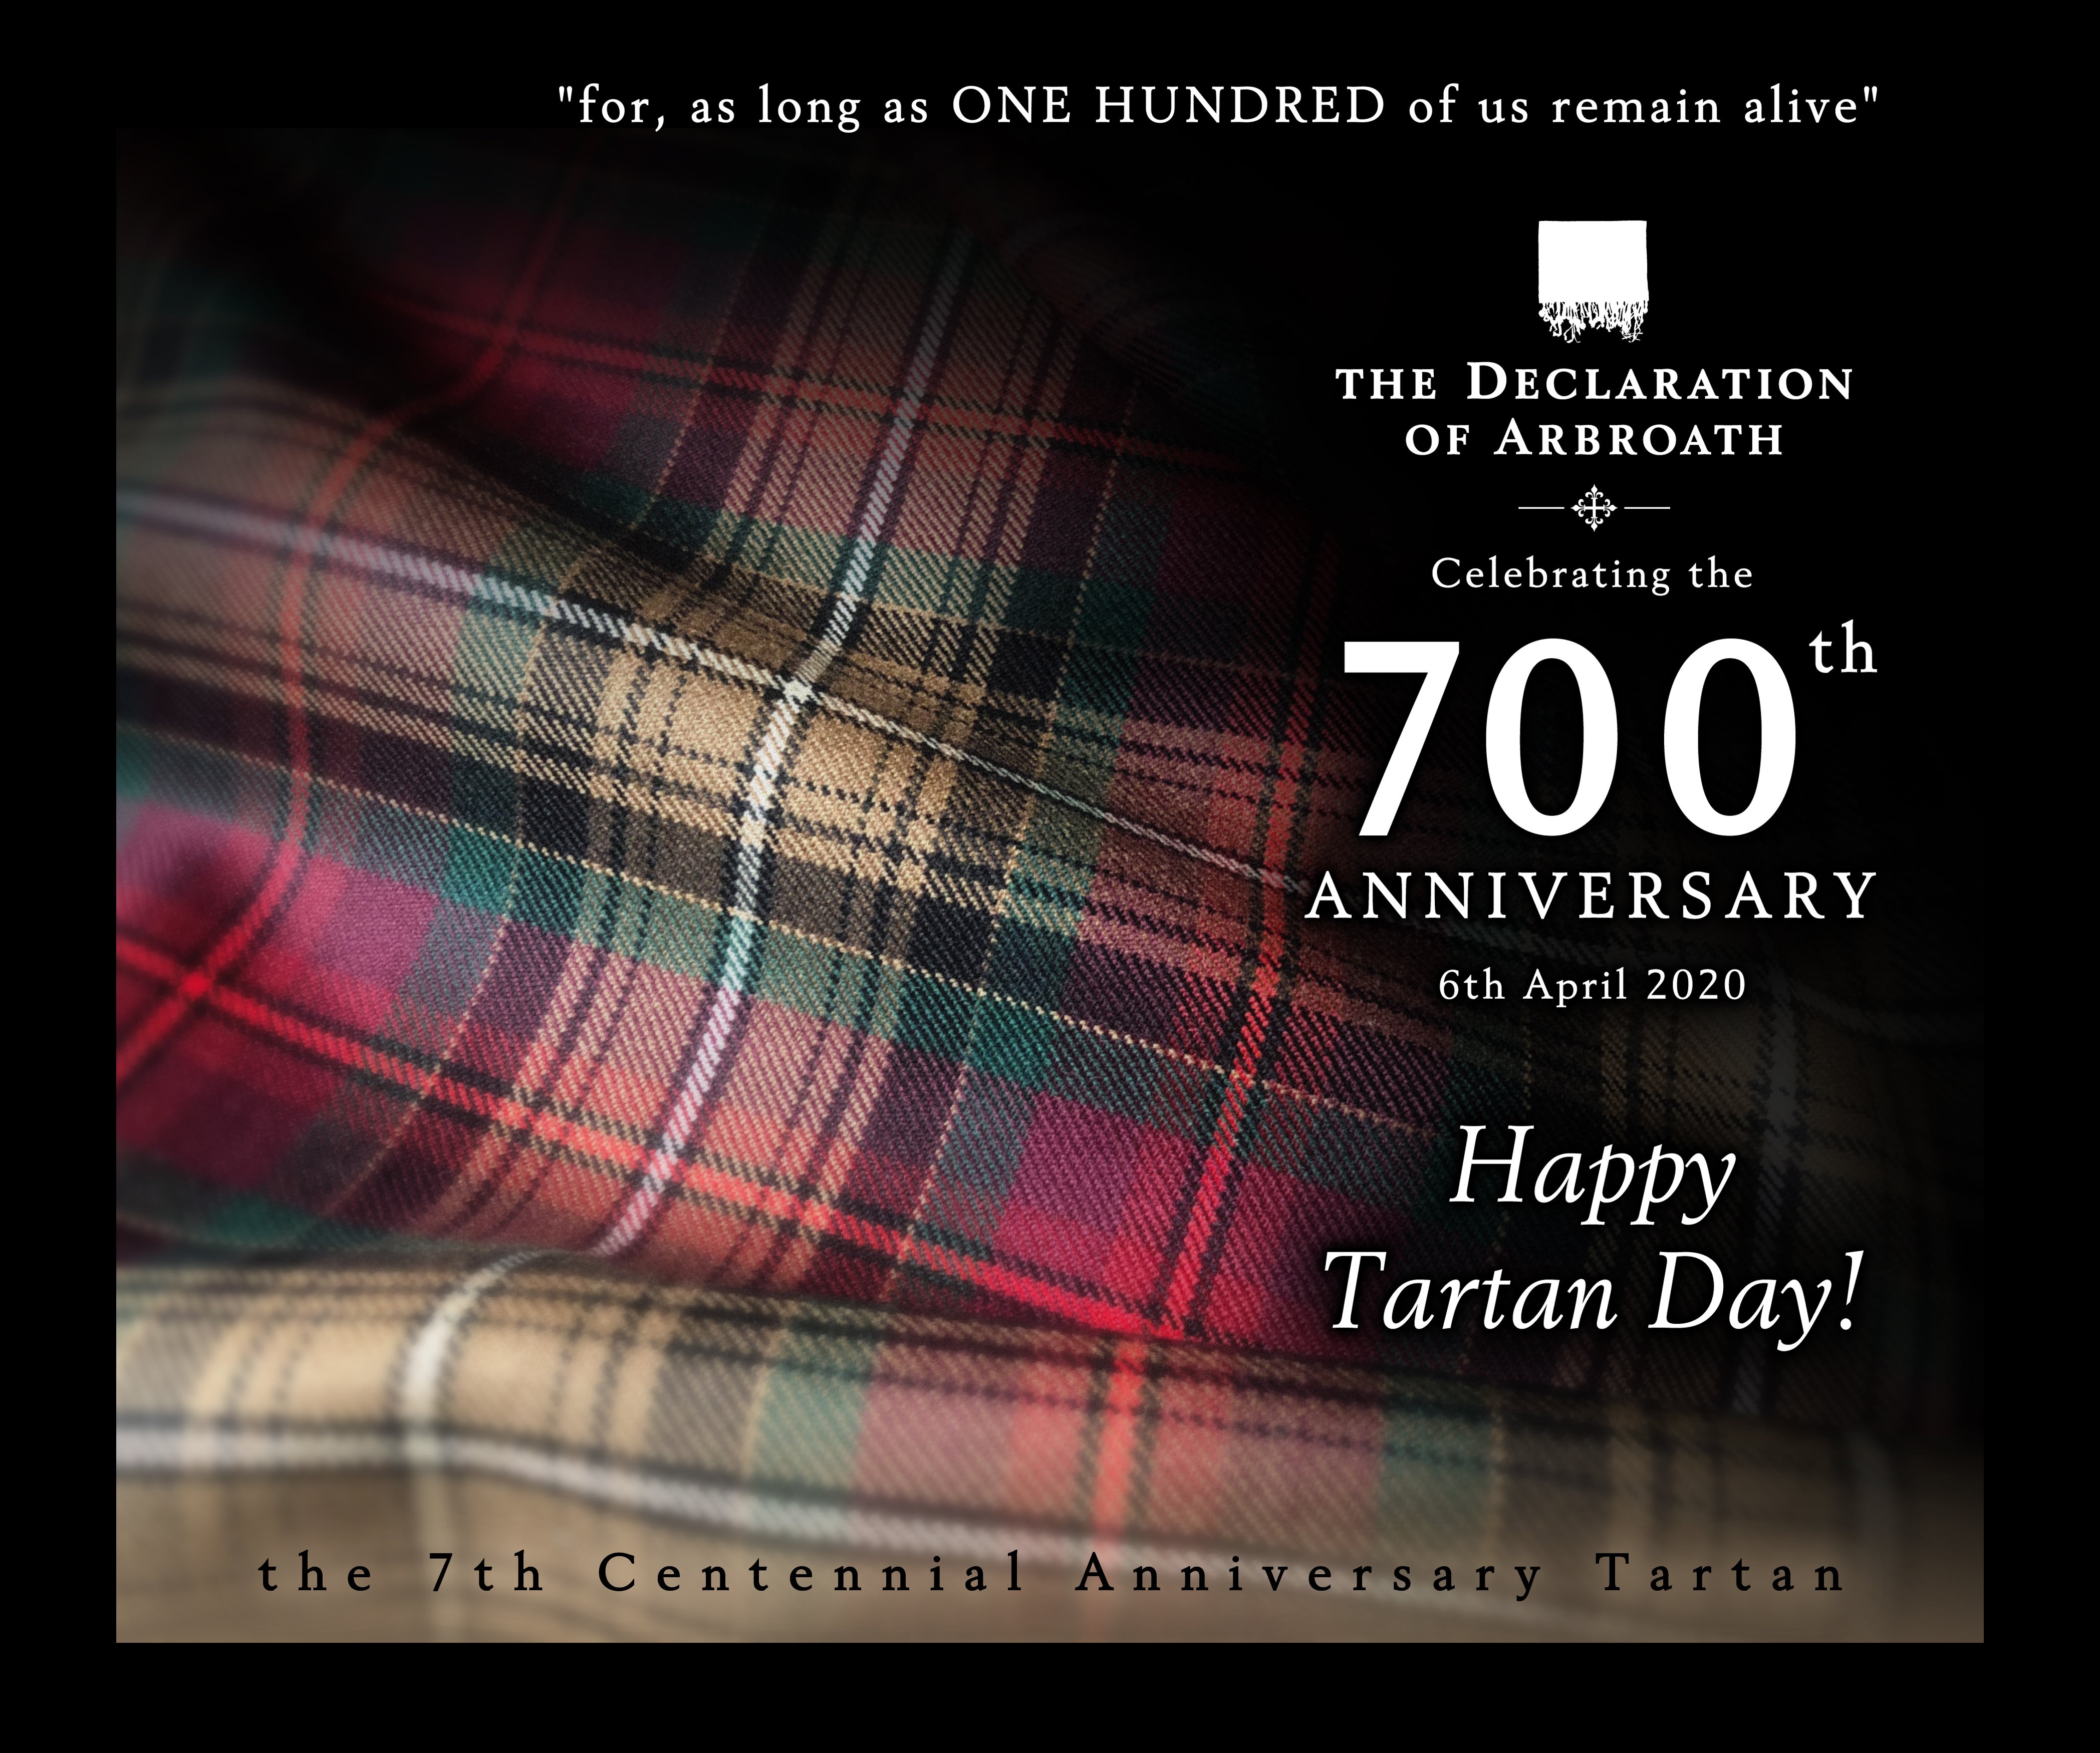 DECLARATION OF ARBROATH 7th Centennial Anniversary tartan by Steven Patrick Sim the Tartan Artisan